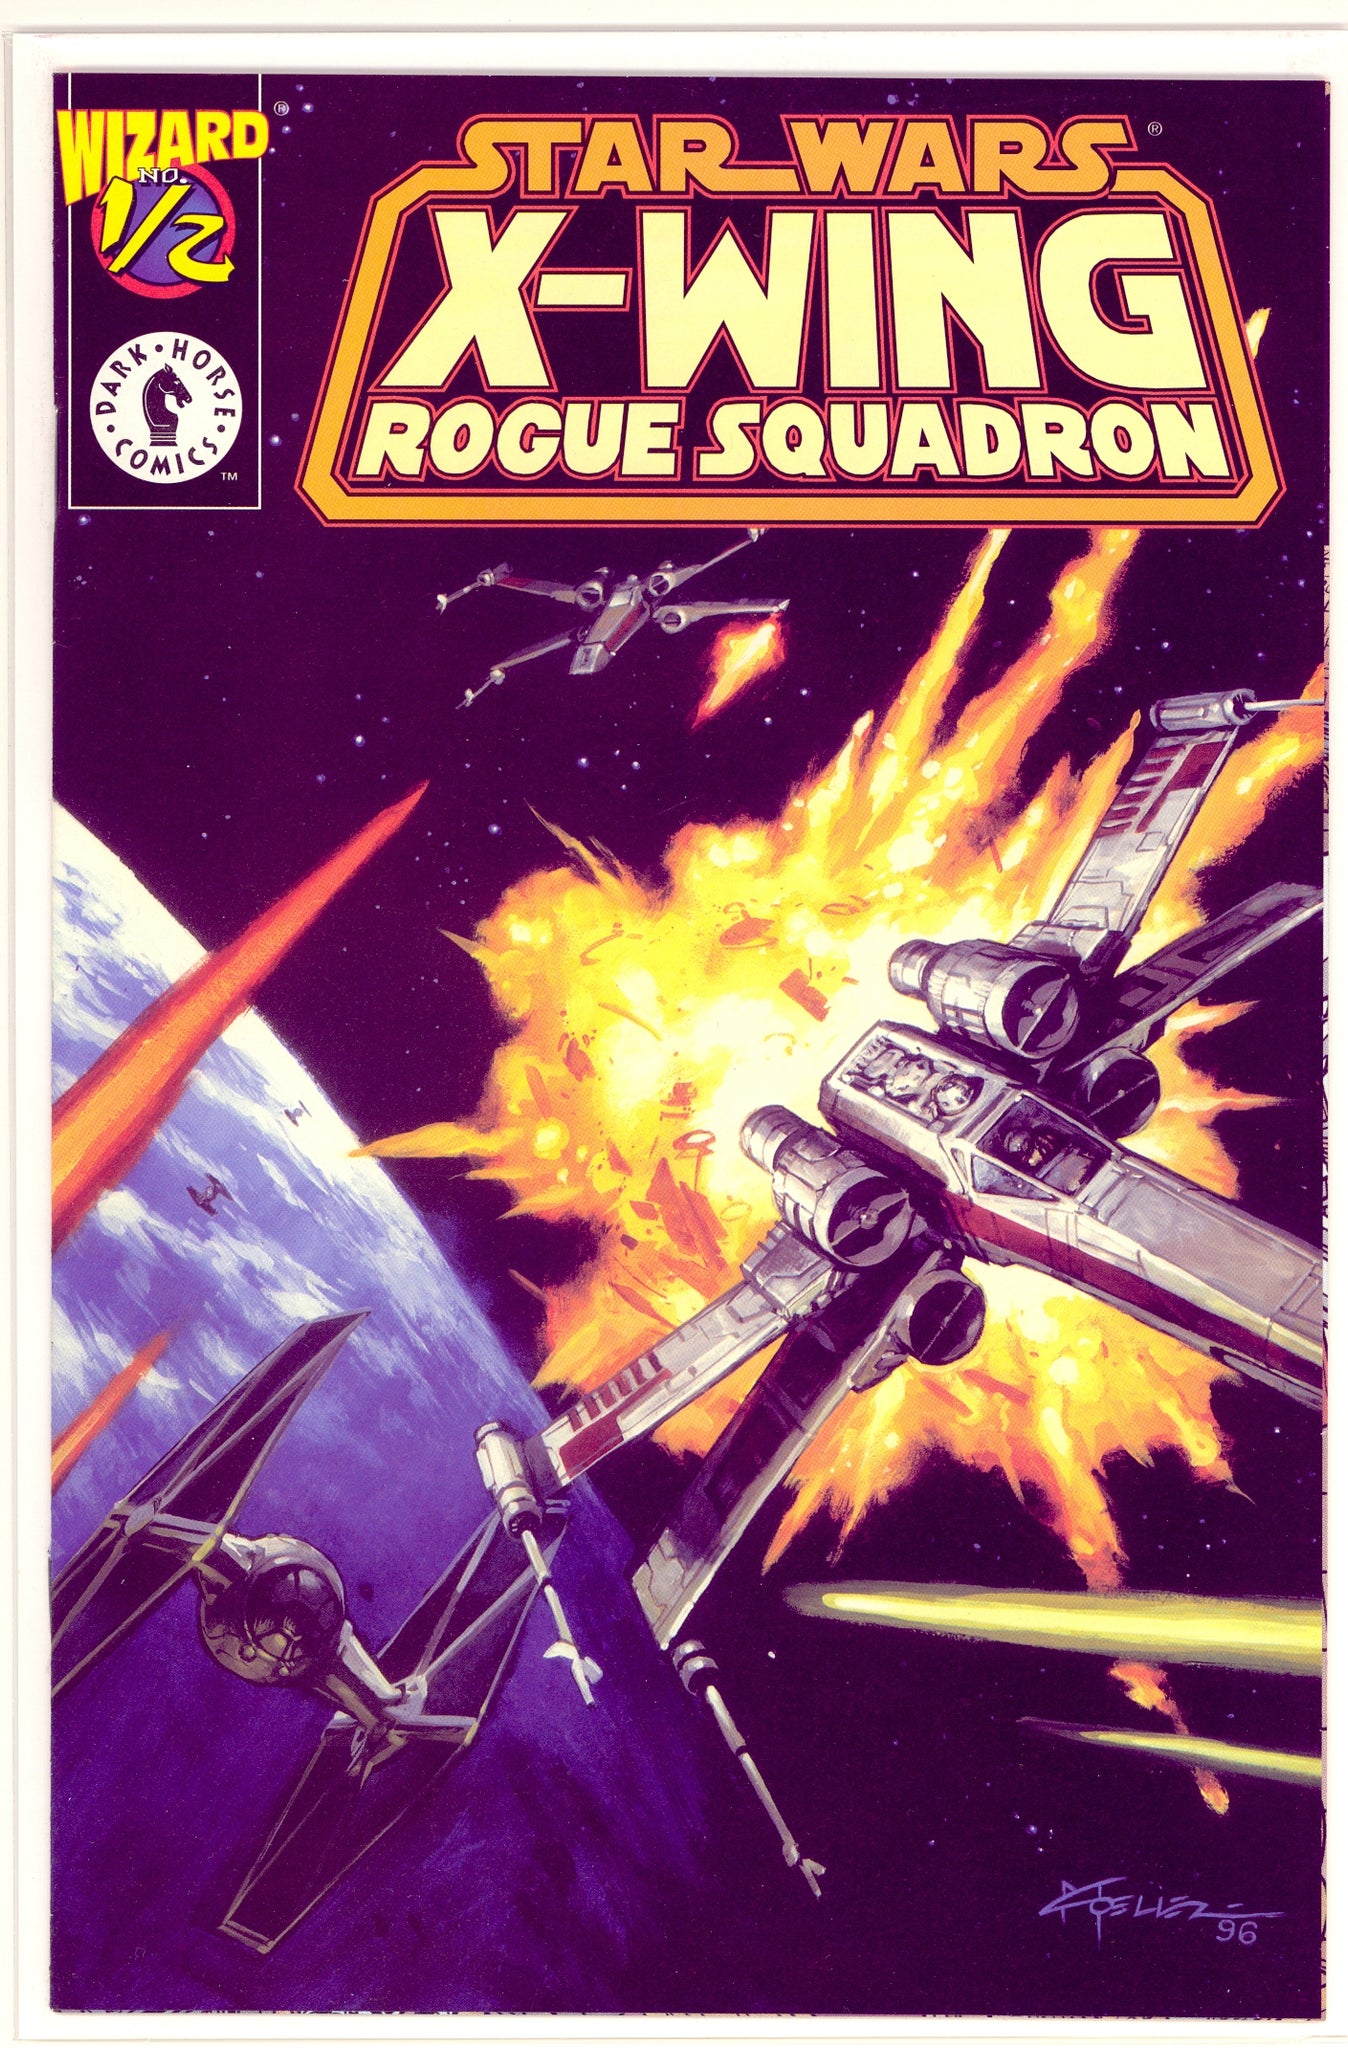 Star Wars X-Wing Rogue Squadron #1/2 (1997) Wizard/Dark Horse